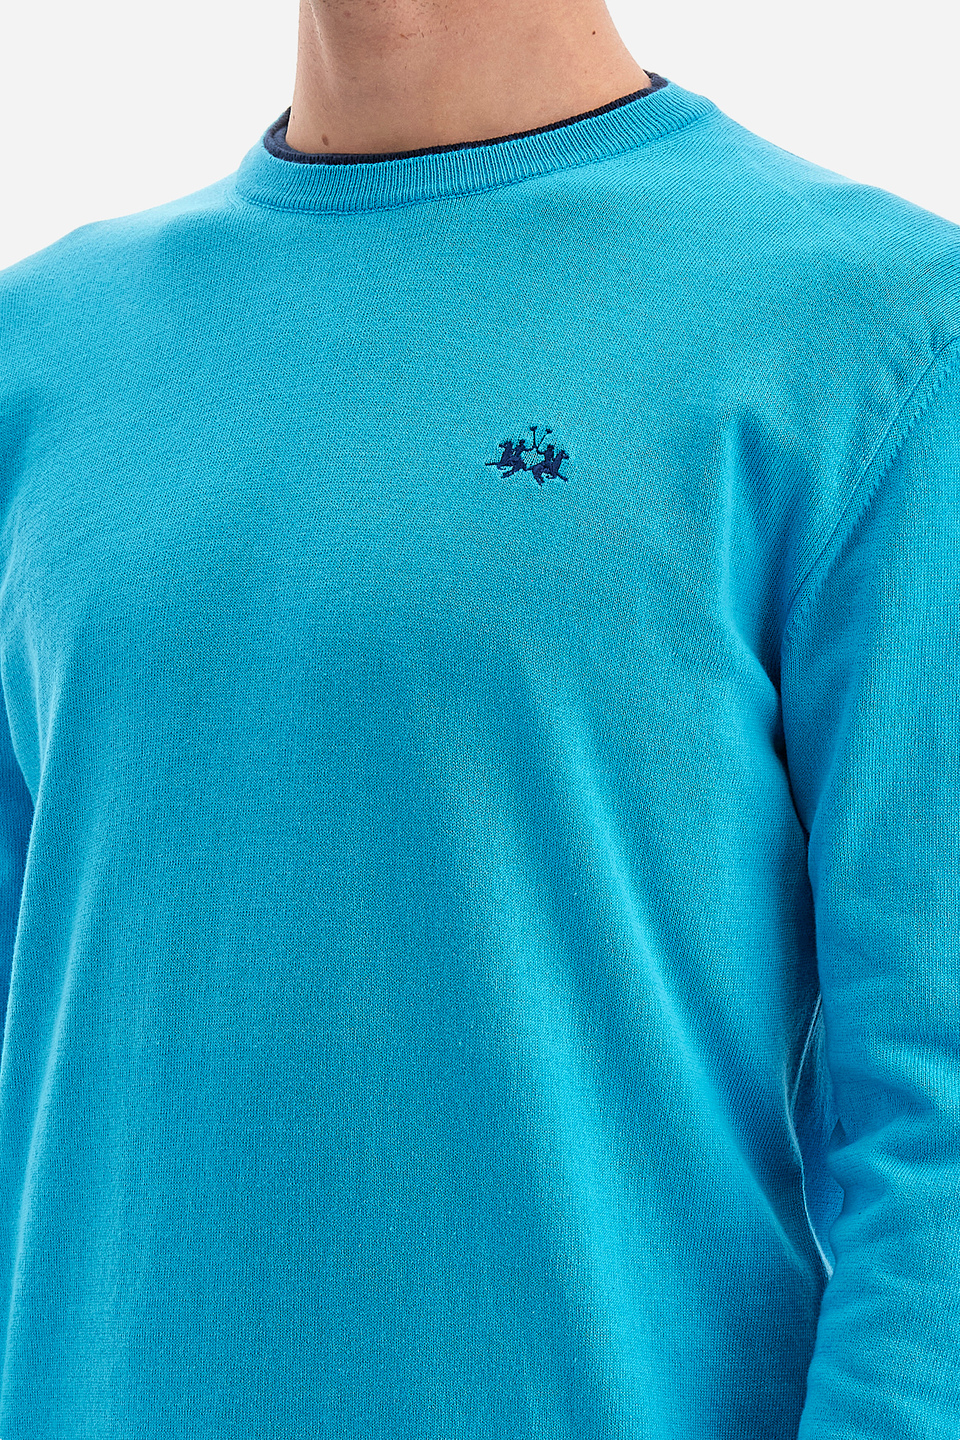 Men's regular fit 100% cotton long-sleeved sweater - Vangelios | La Martina - Official Online Shop